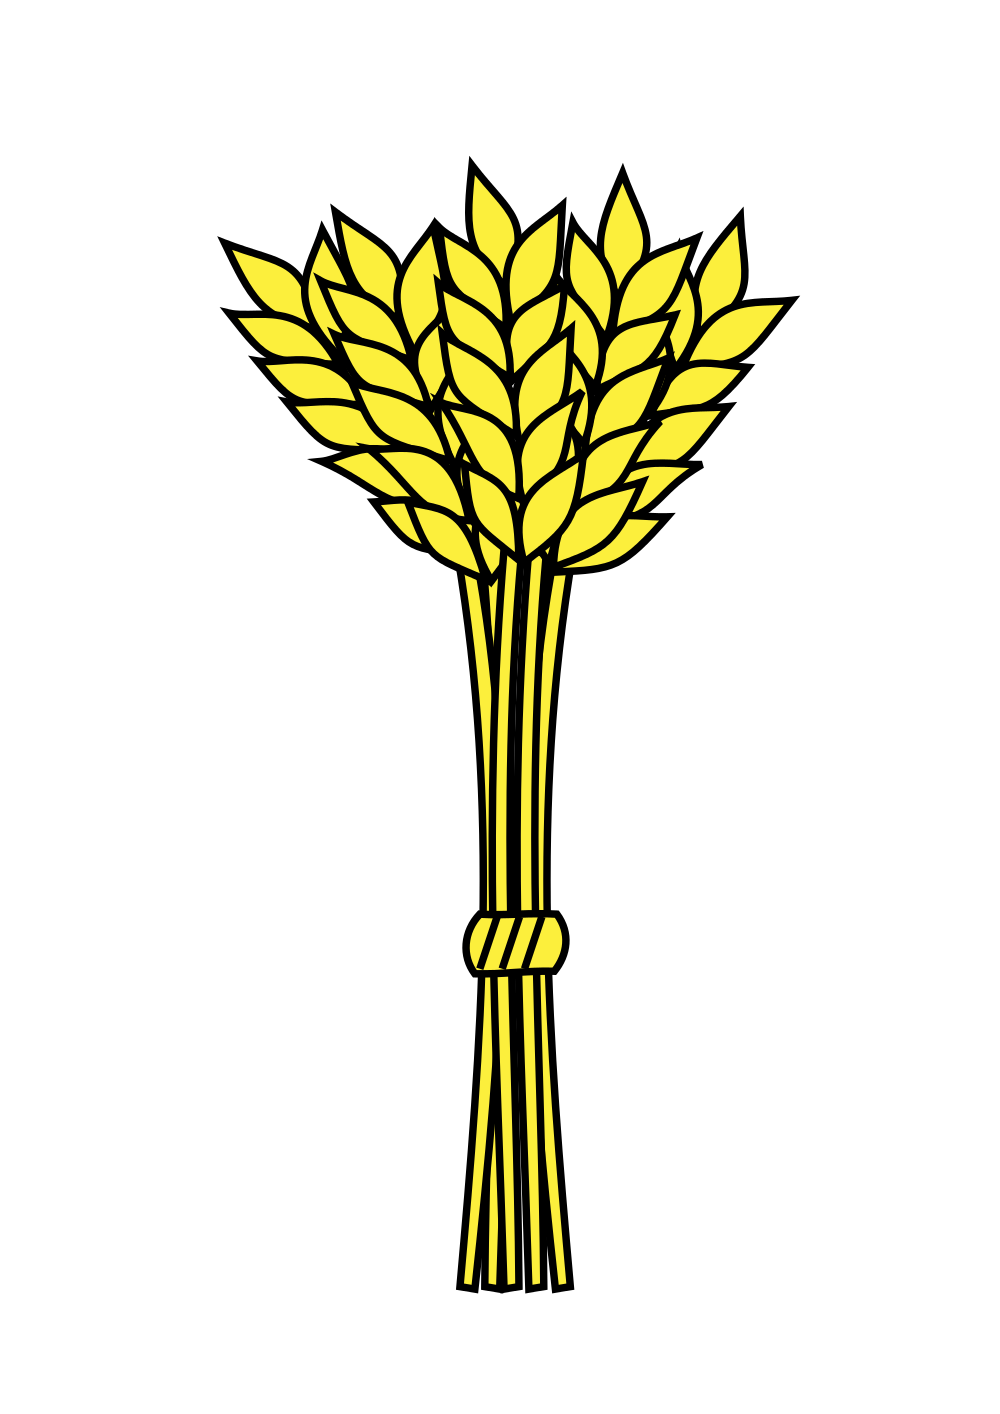 grain clipart bushel wheat